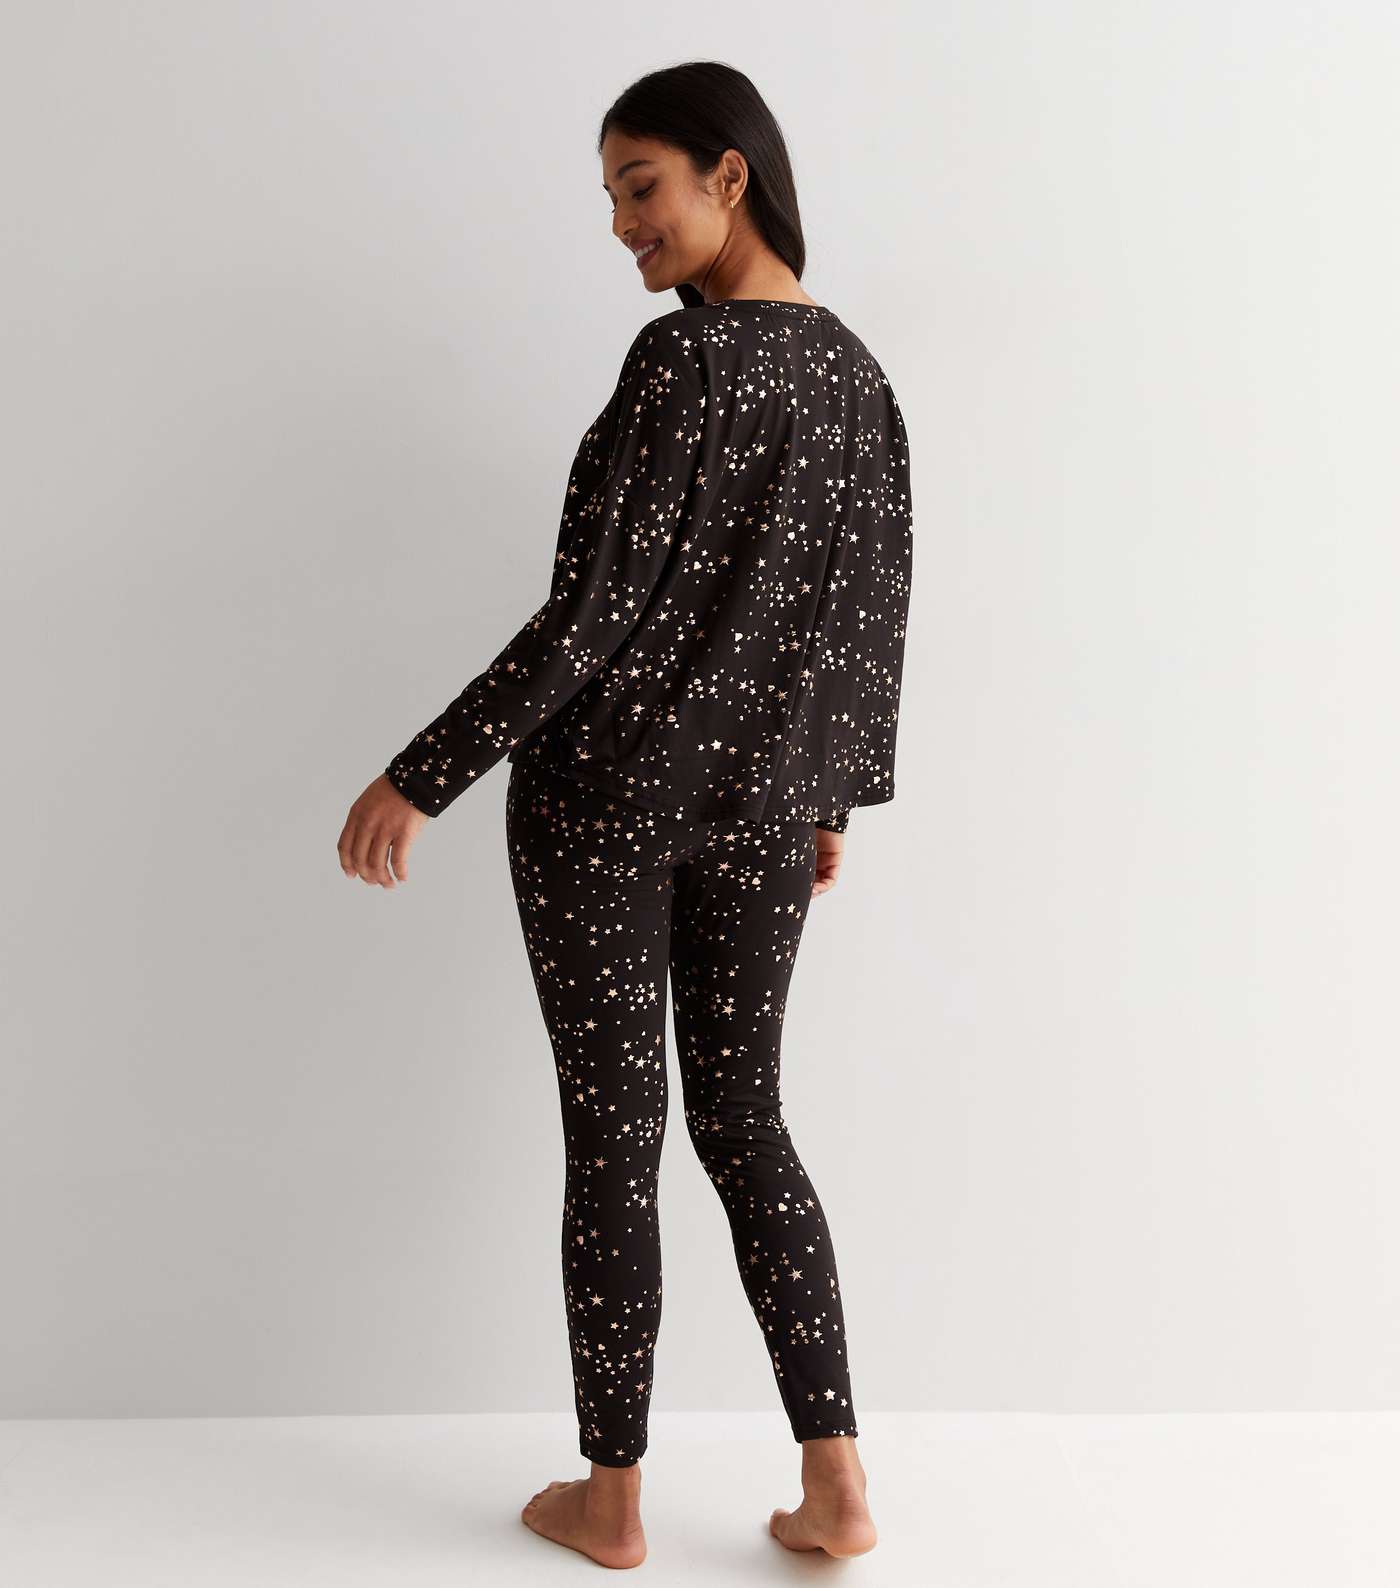 Petite Black Soft Touch Pyjama Set with Metallic Star Print Image 4